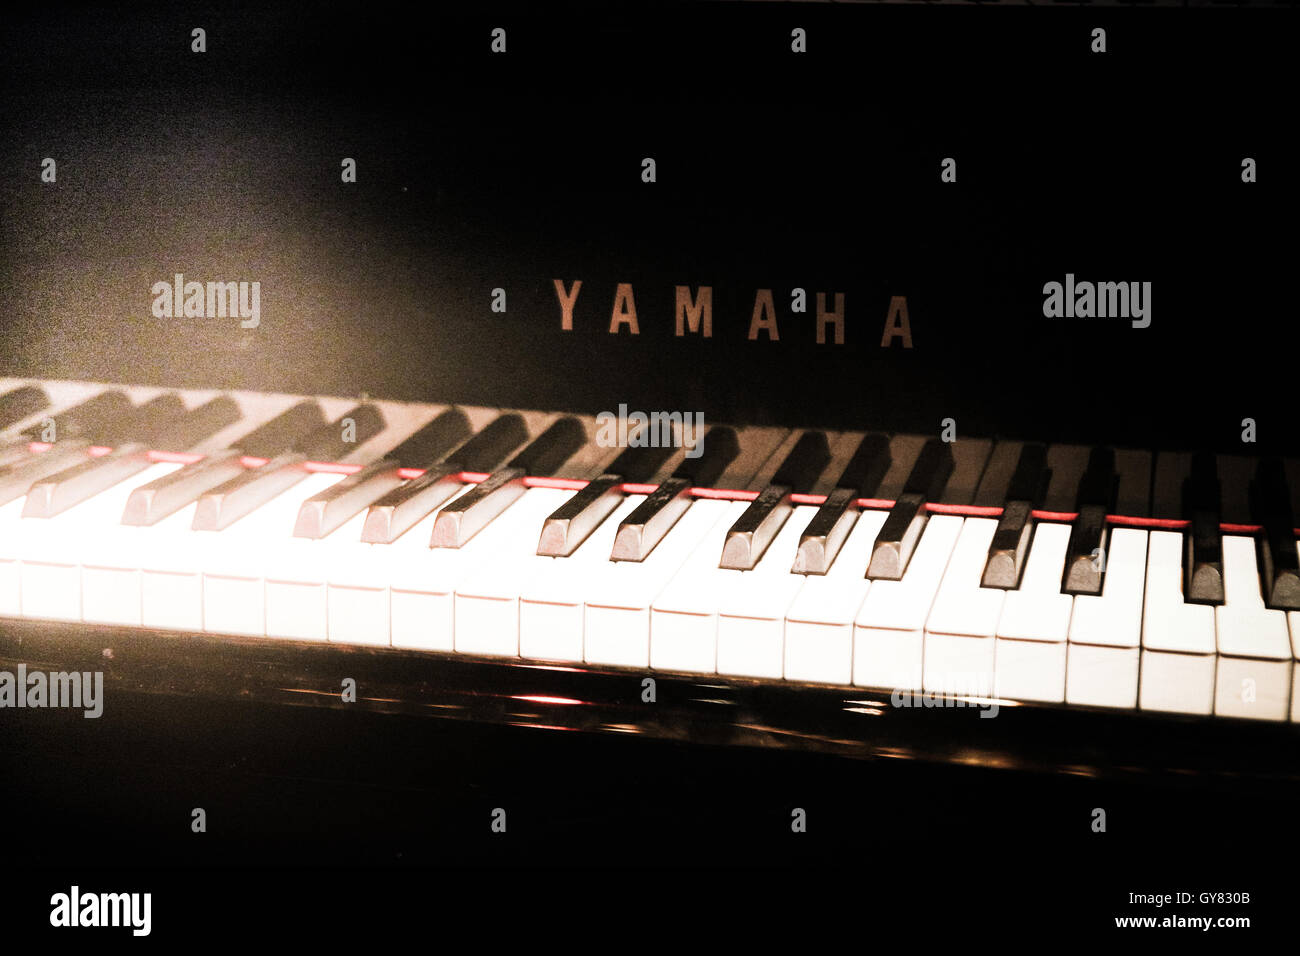 Piano yamaha fotografías e imágenes de alta resolución - Alamy